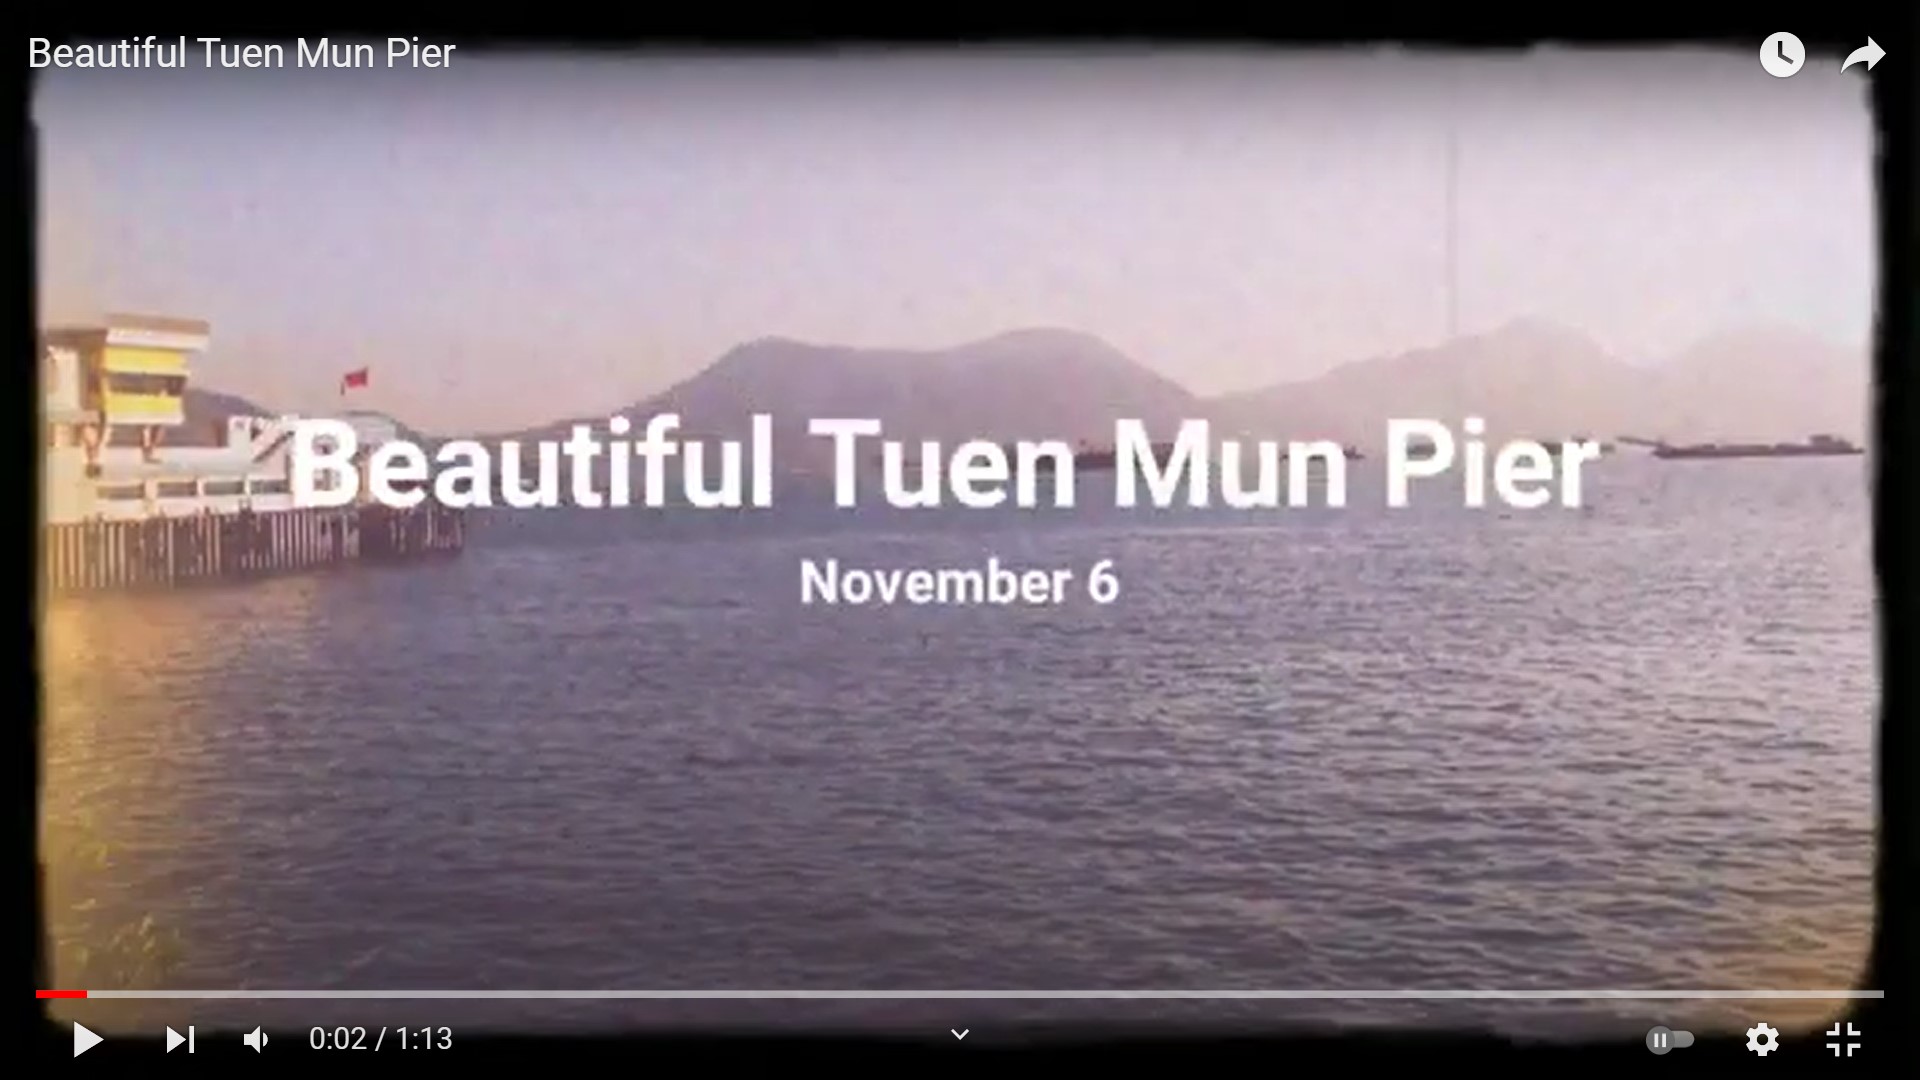 Frank's "Beautiful Tuen Mun Pier" snapshots video